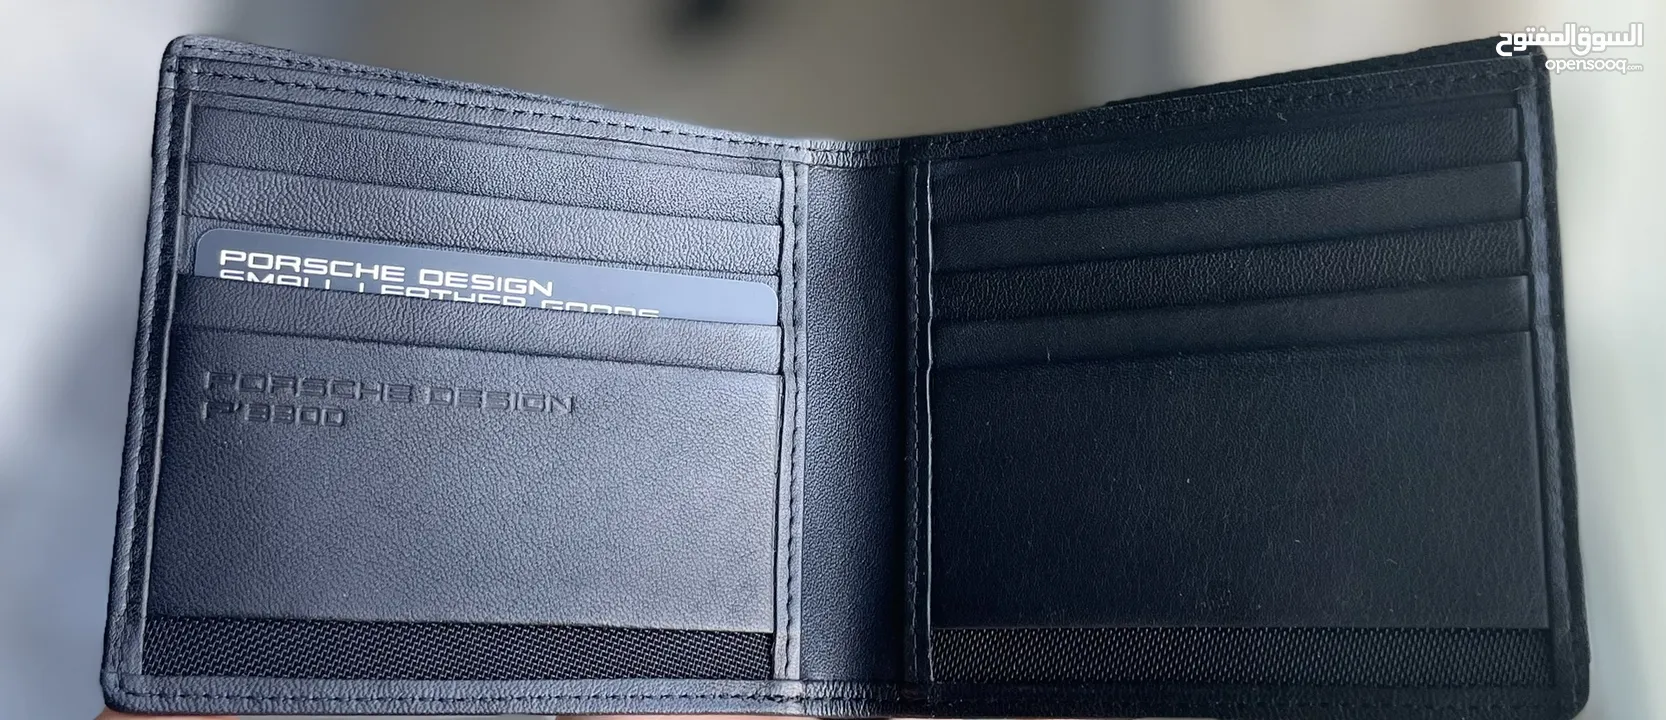 Porsche Design Small Leather Wallet